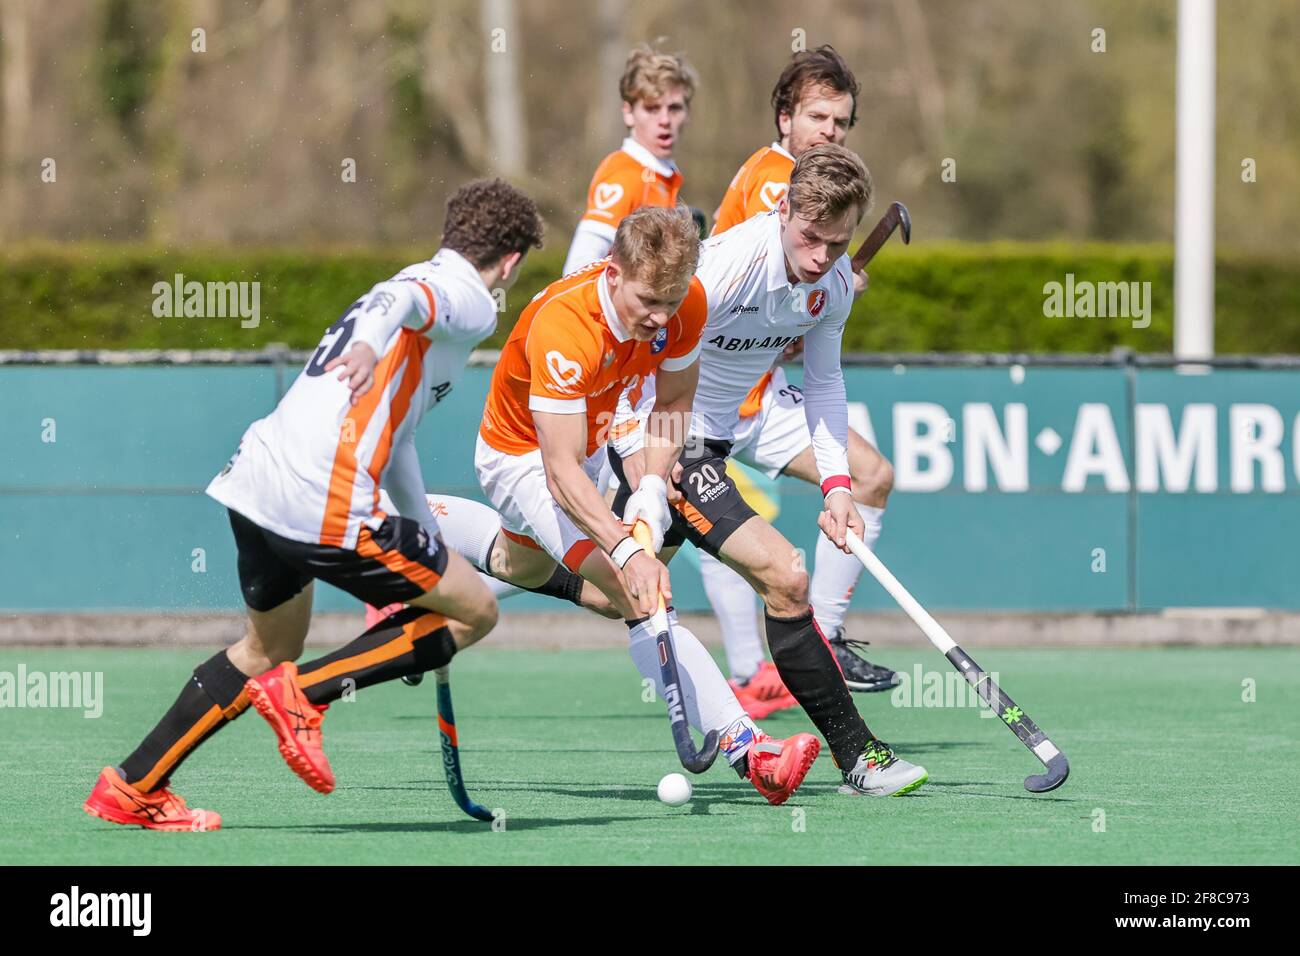 BLOEMENDAAL, NETHERLANDS - APRIL 11: Job Scheffers of Oranje Rood, Jasper Brinkman of Bloemendaal during the Dutch Men Hockey Hoofdklasse match betwee Stock Photo